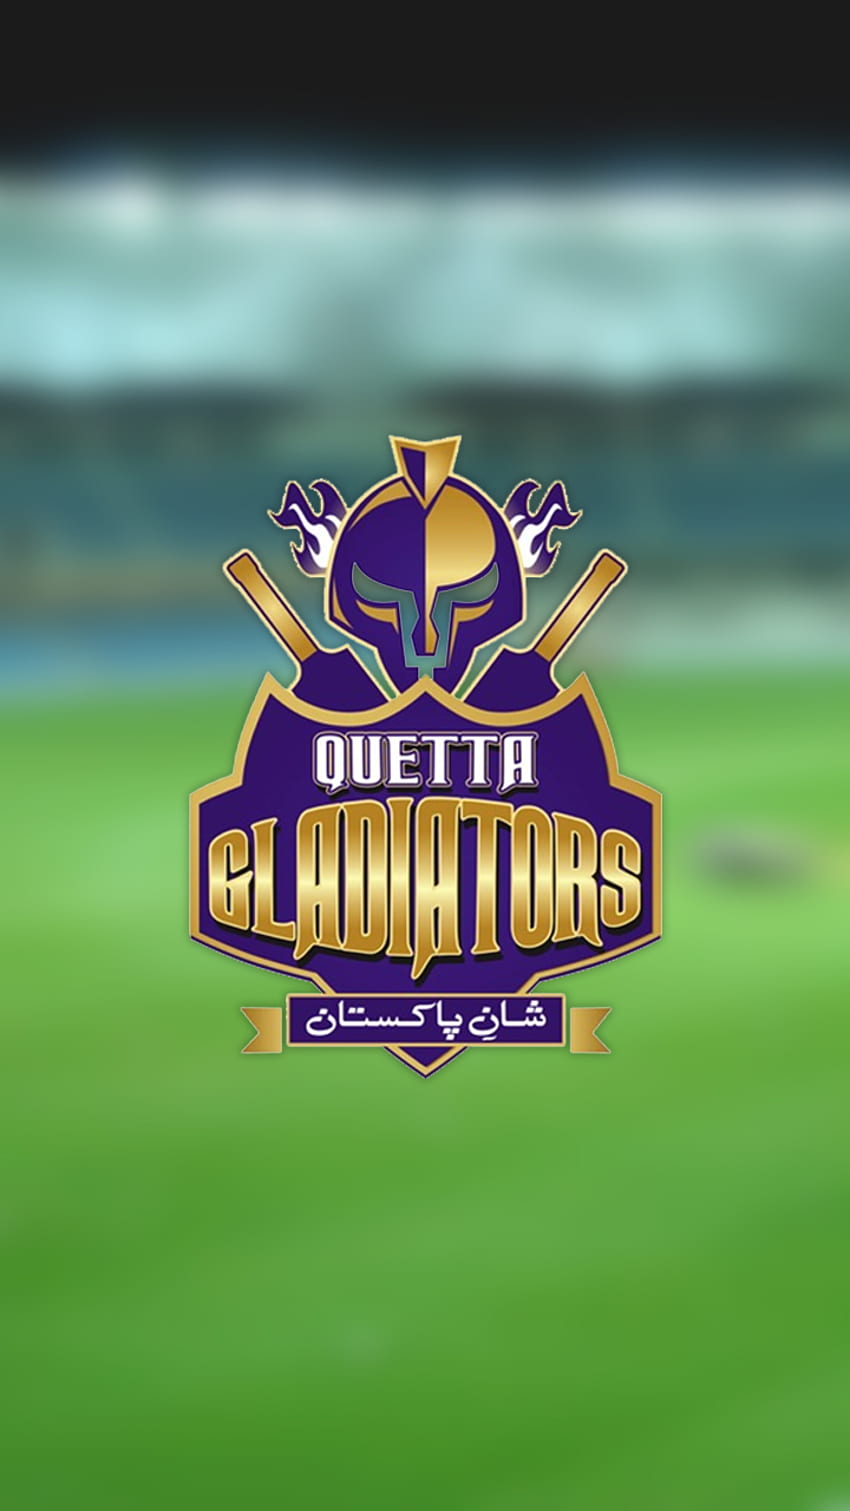 Quetta Gladiators - PSL Cricket team - Mobile Phone full , Cricket Logo HD phone wallpaper